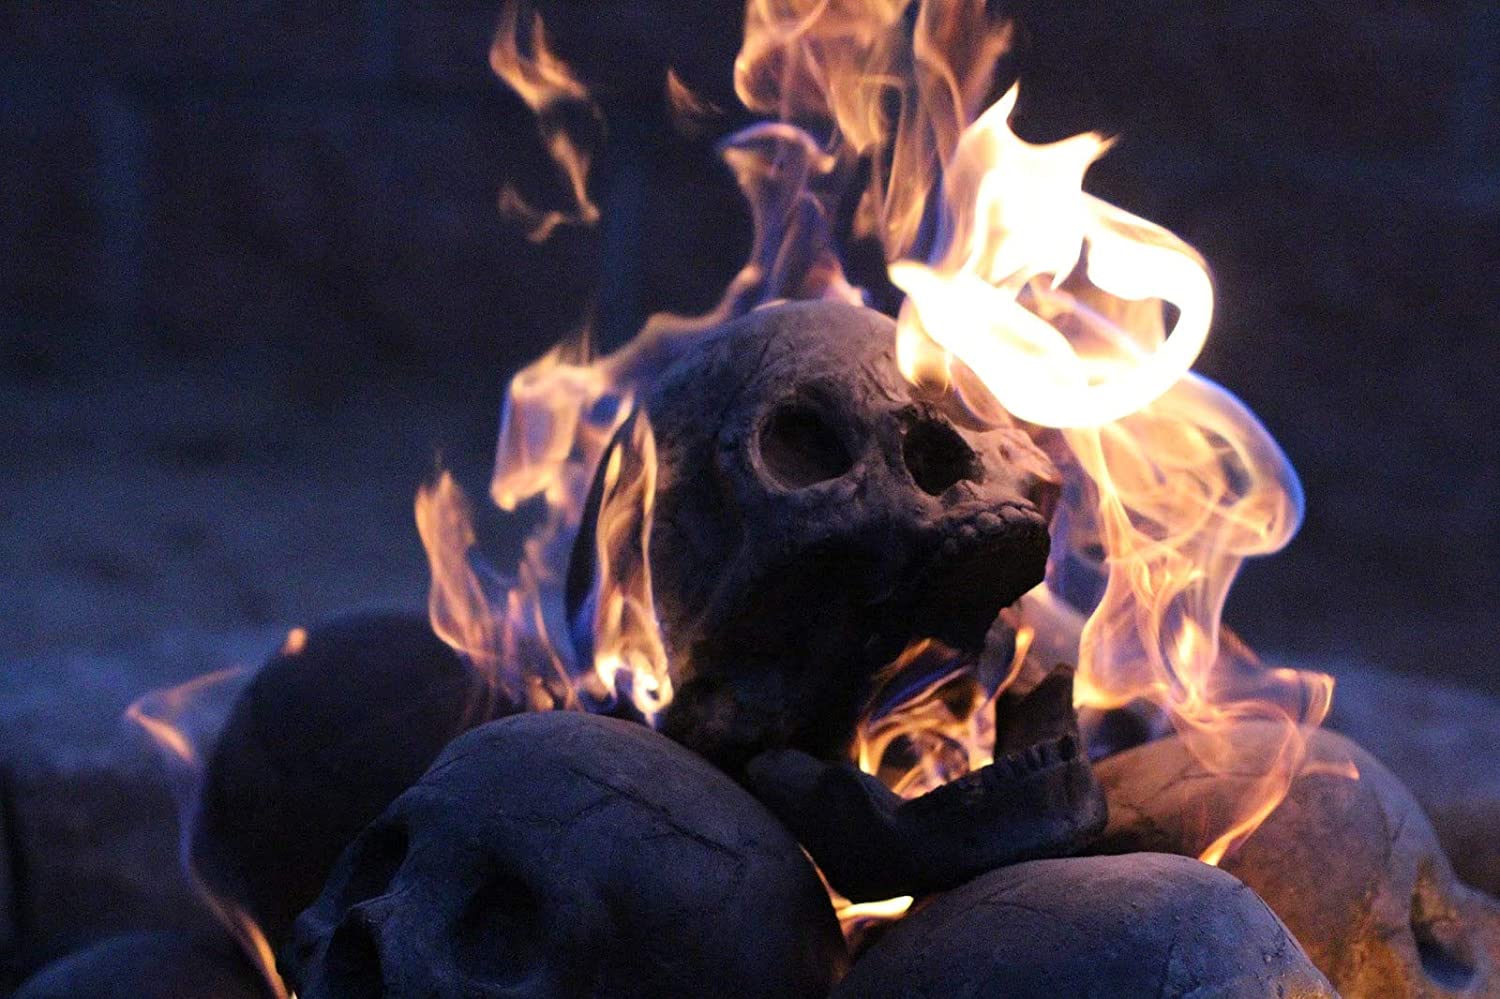 Fake Fireproof Human Skulls For Your Fire-pit - Burning skull bonfire Halloween prop